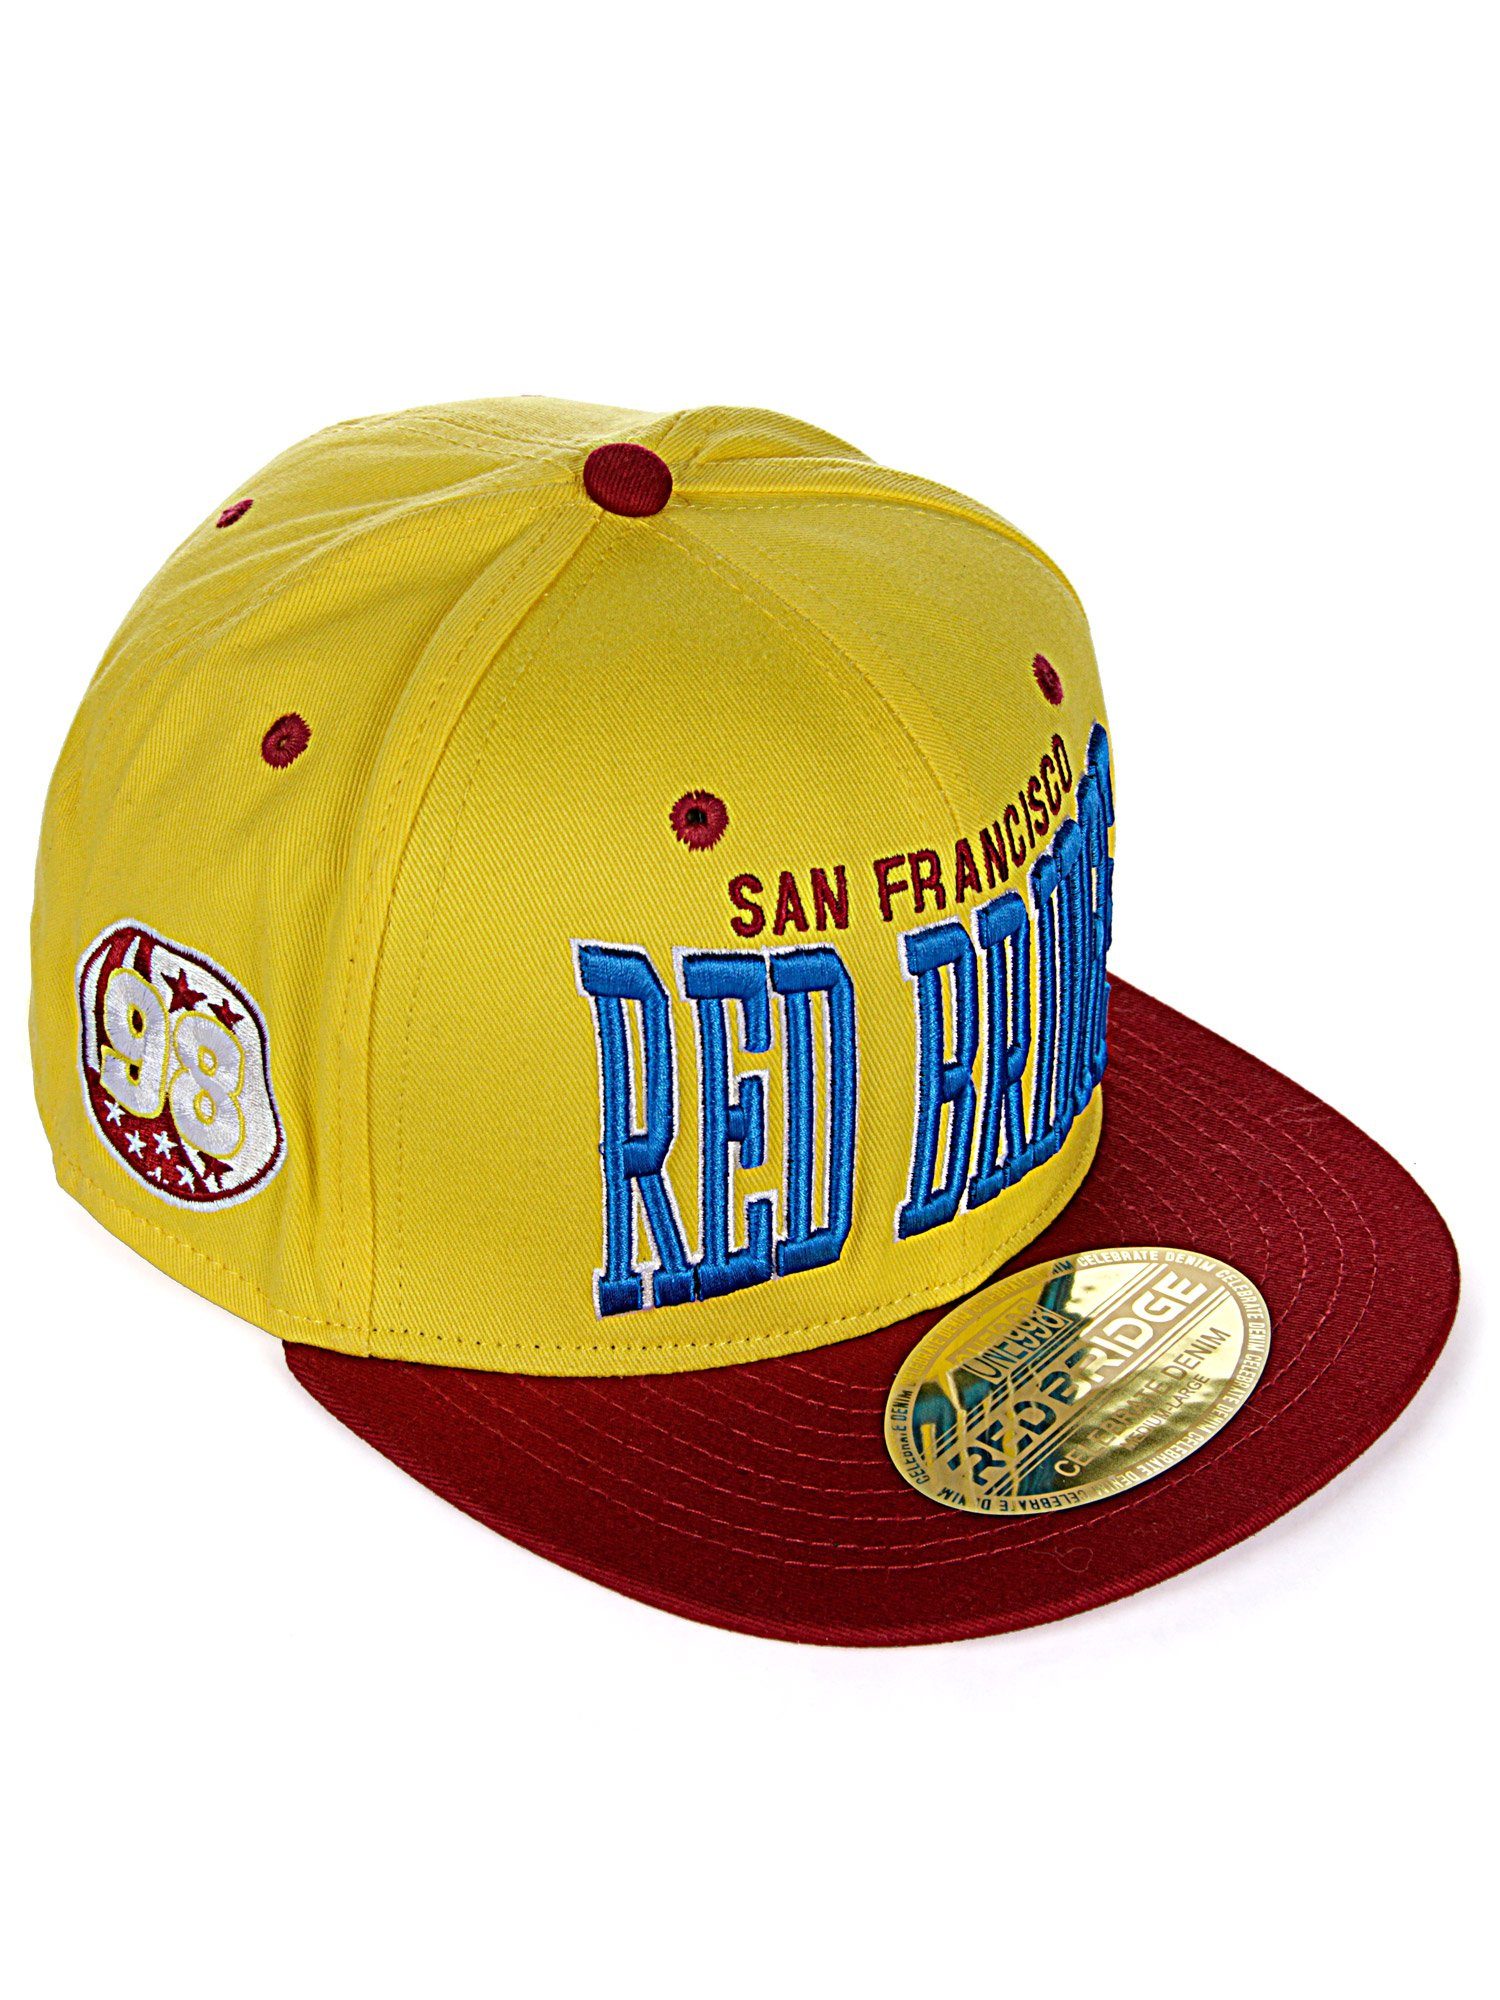 Durham kontrastfarbigem gelb-rot Baseball mit Schirm RedBridge Cap